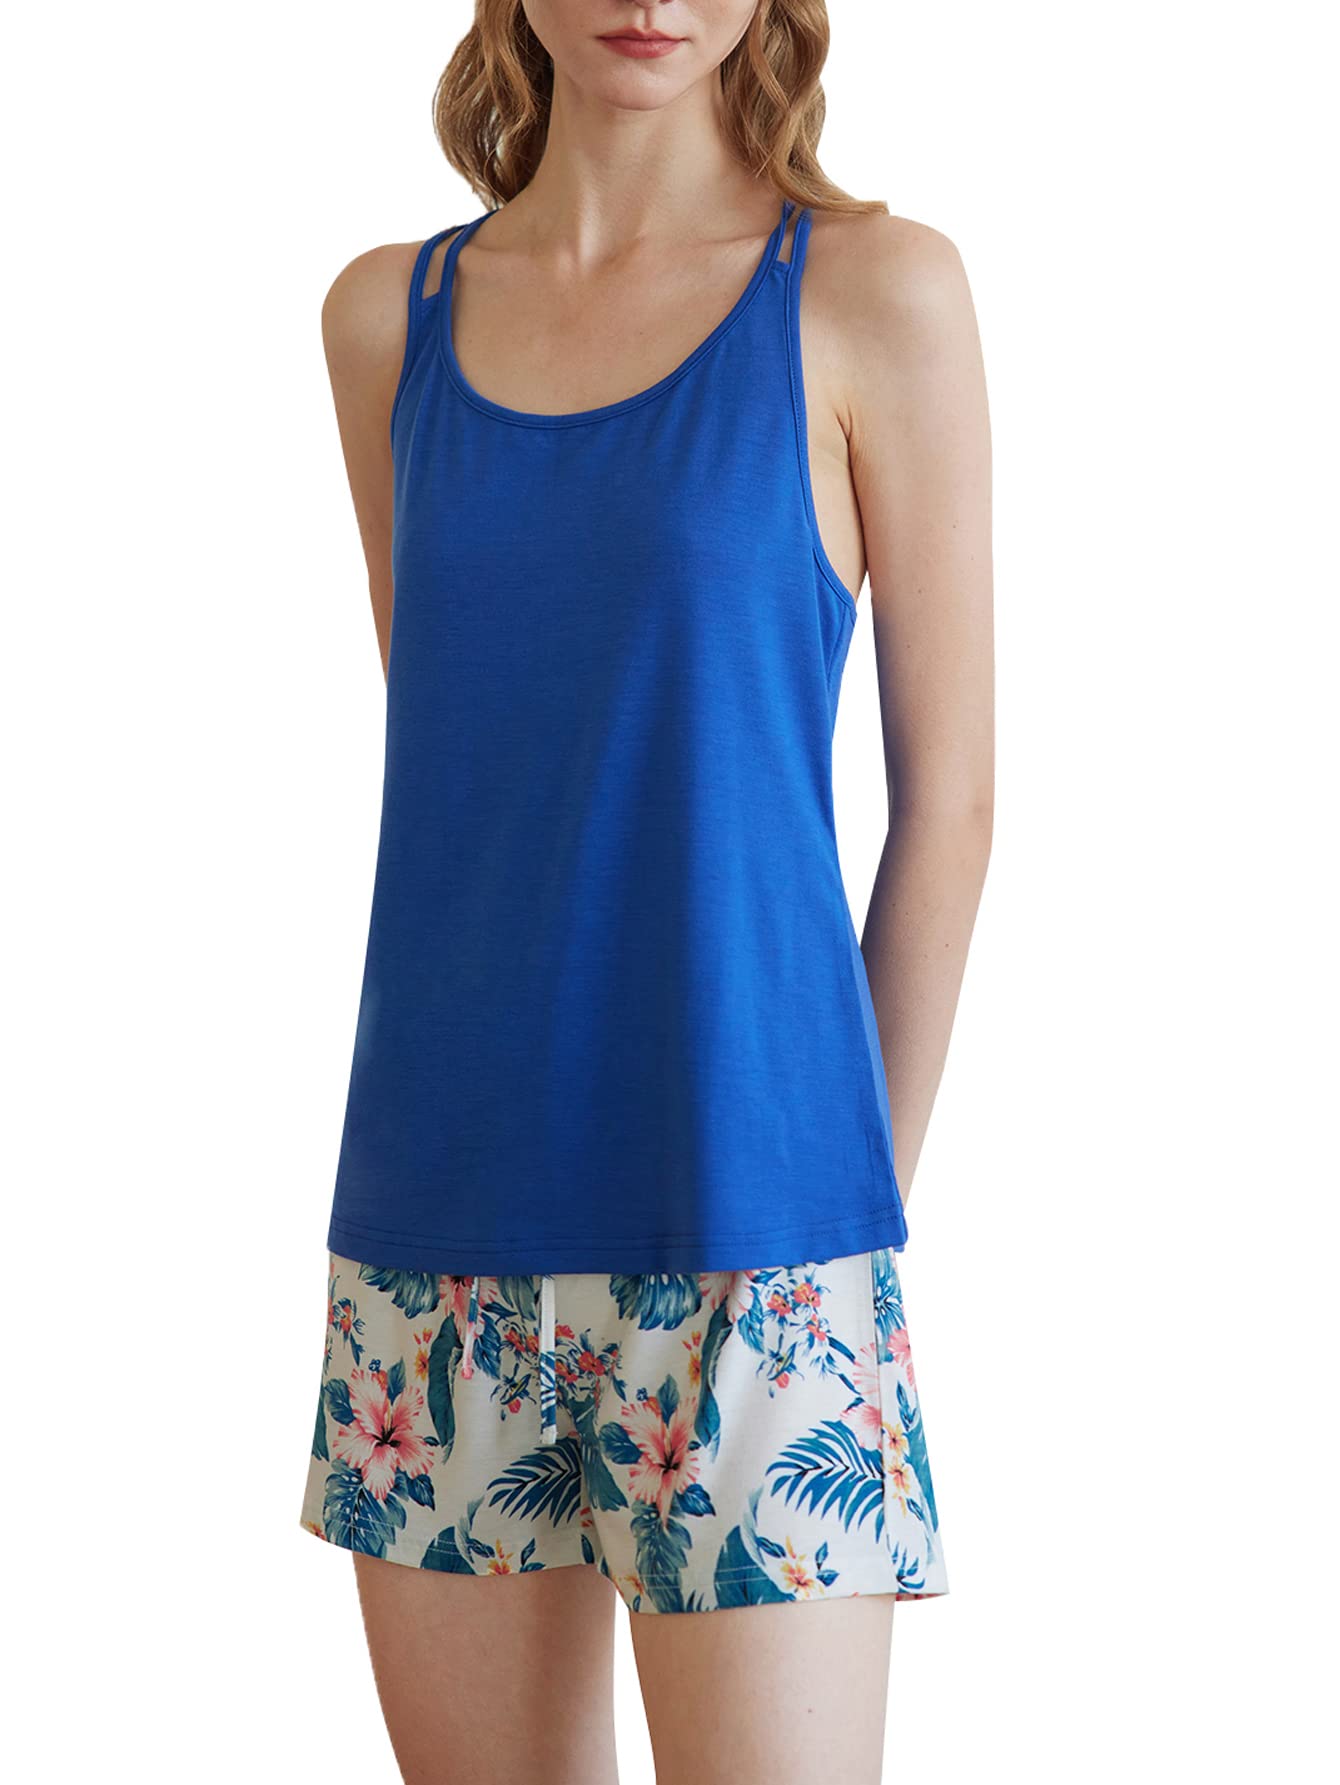 Women's Tank Top and Tropical Print Shorts Pajama Set - Latuza